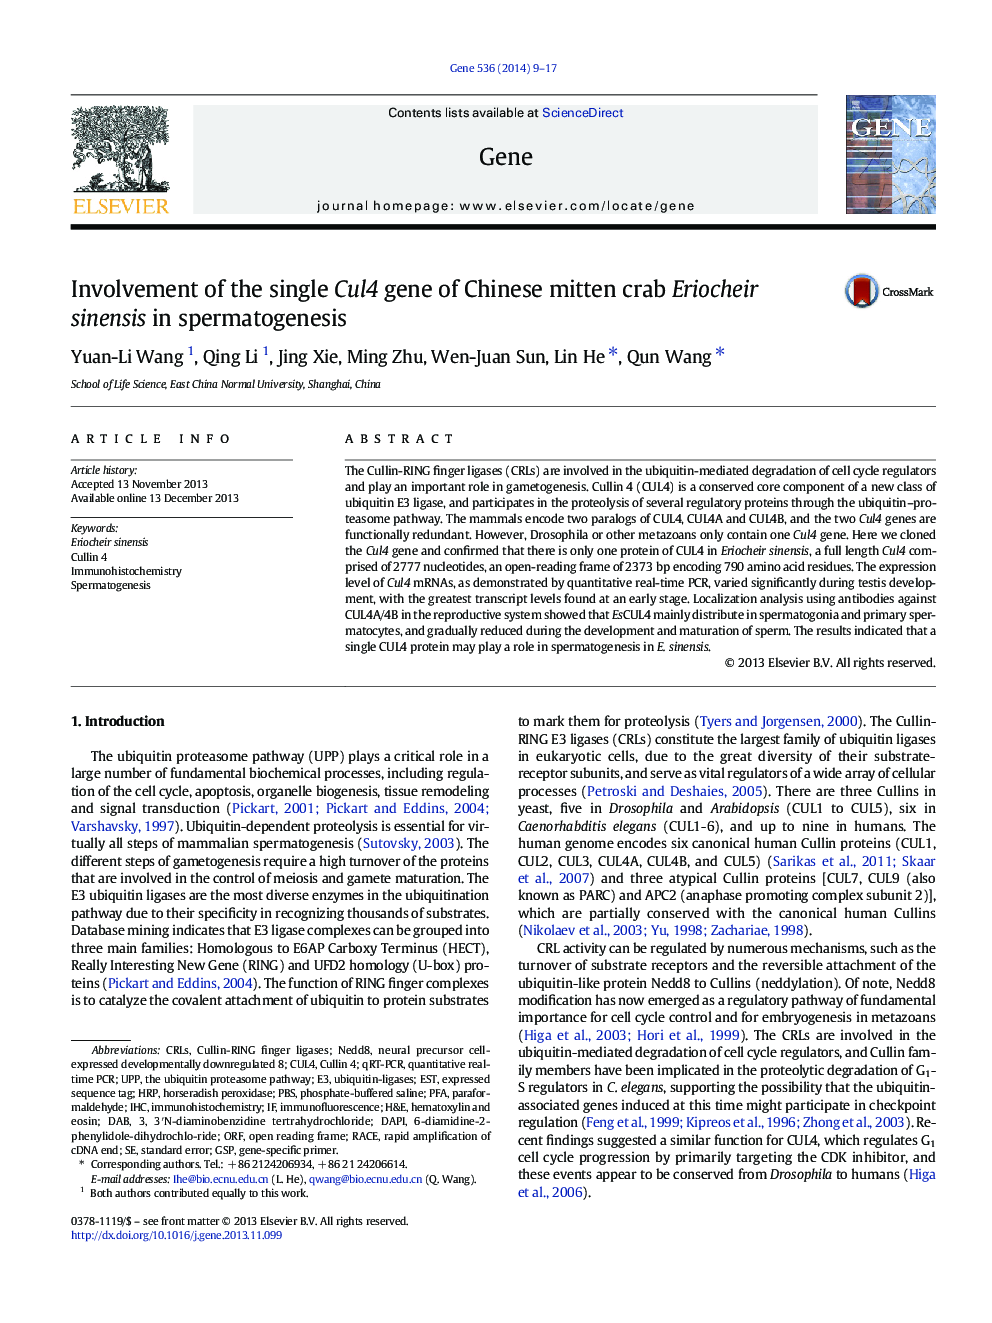 Involvement of the single Cul4 gene of Chinese mitten crab Eriocheir sinensis in spermatogenesis